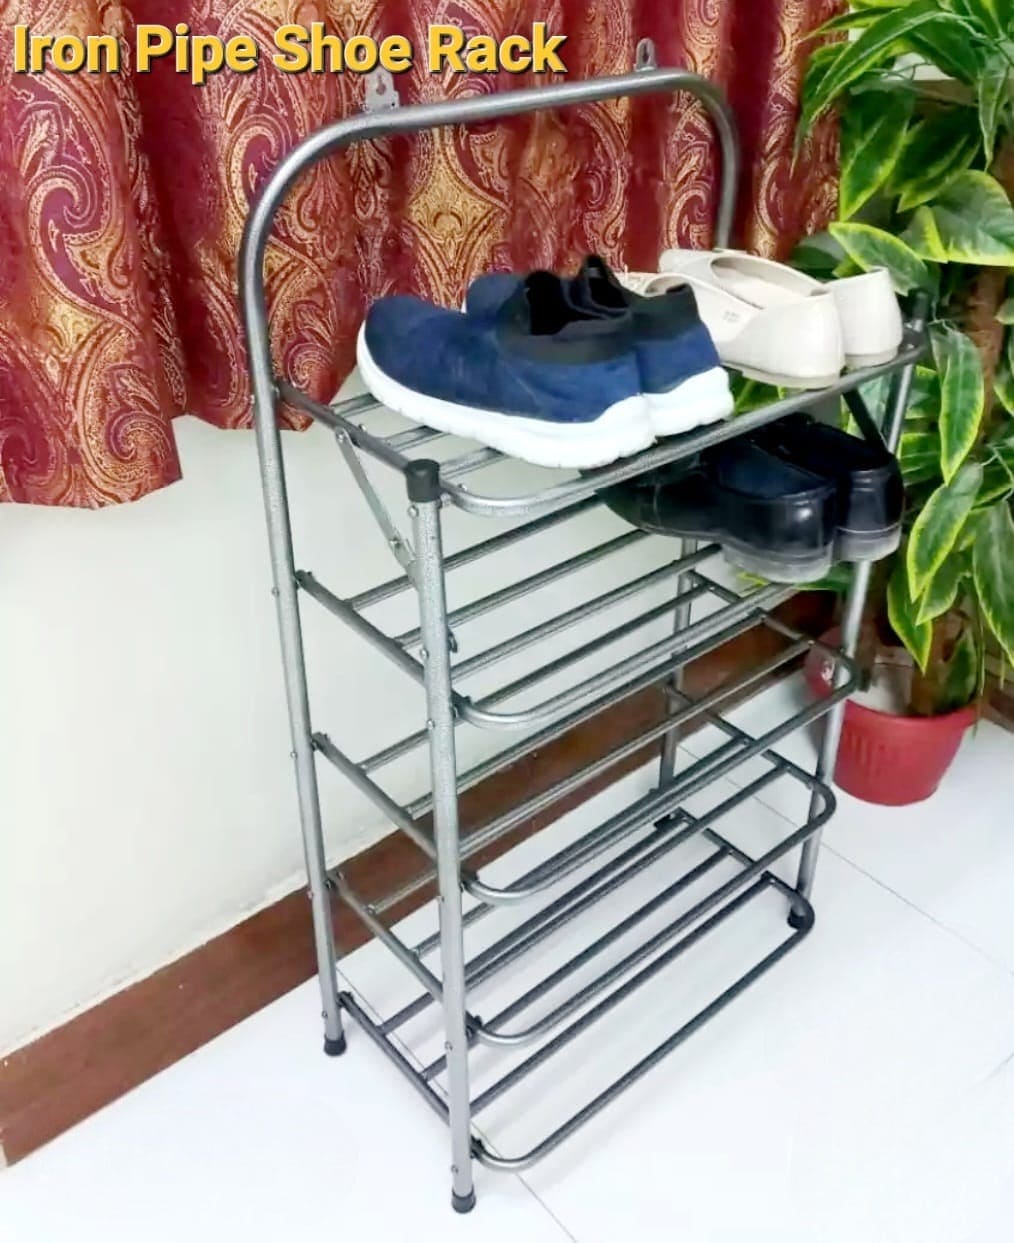 Folding Shoe Rack, Iron Pipe Multi Tier Shoe Rack, Multifunctional Storage Organizer, Dormitory Door Simple Shoe Organizer,